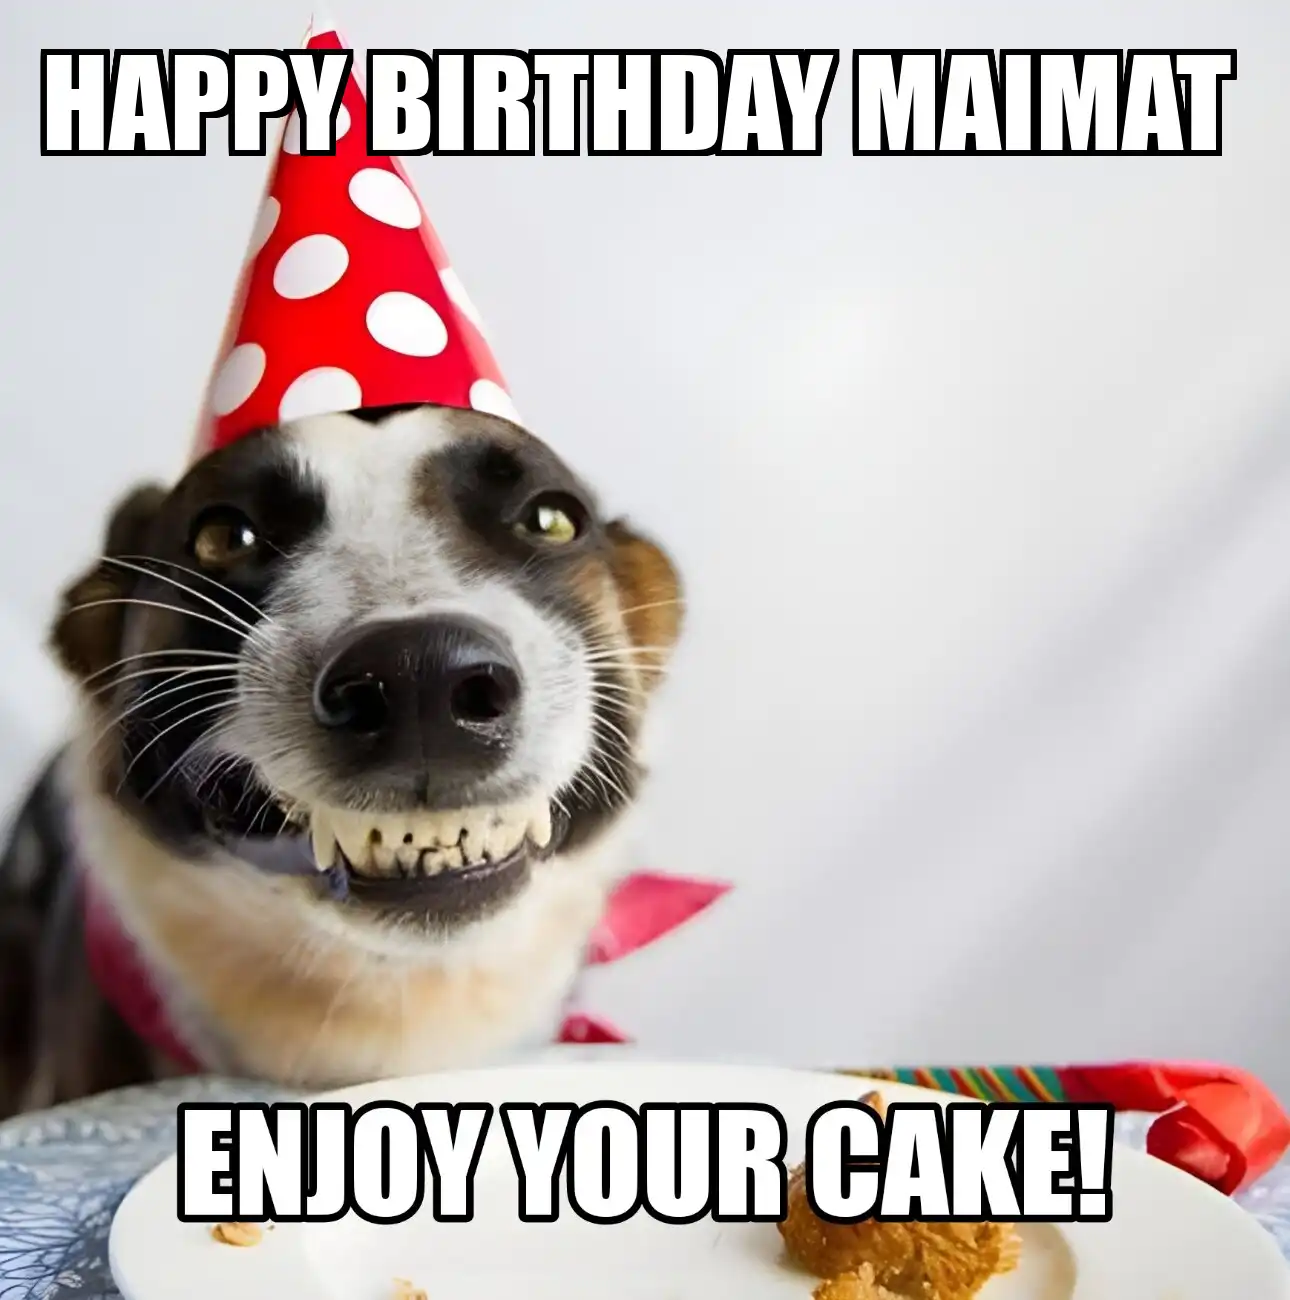 Happy Birthday Maimat Enjoy Your Cake Dog Meme